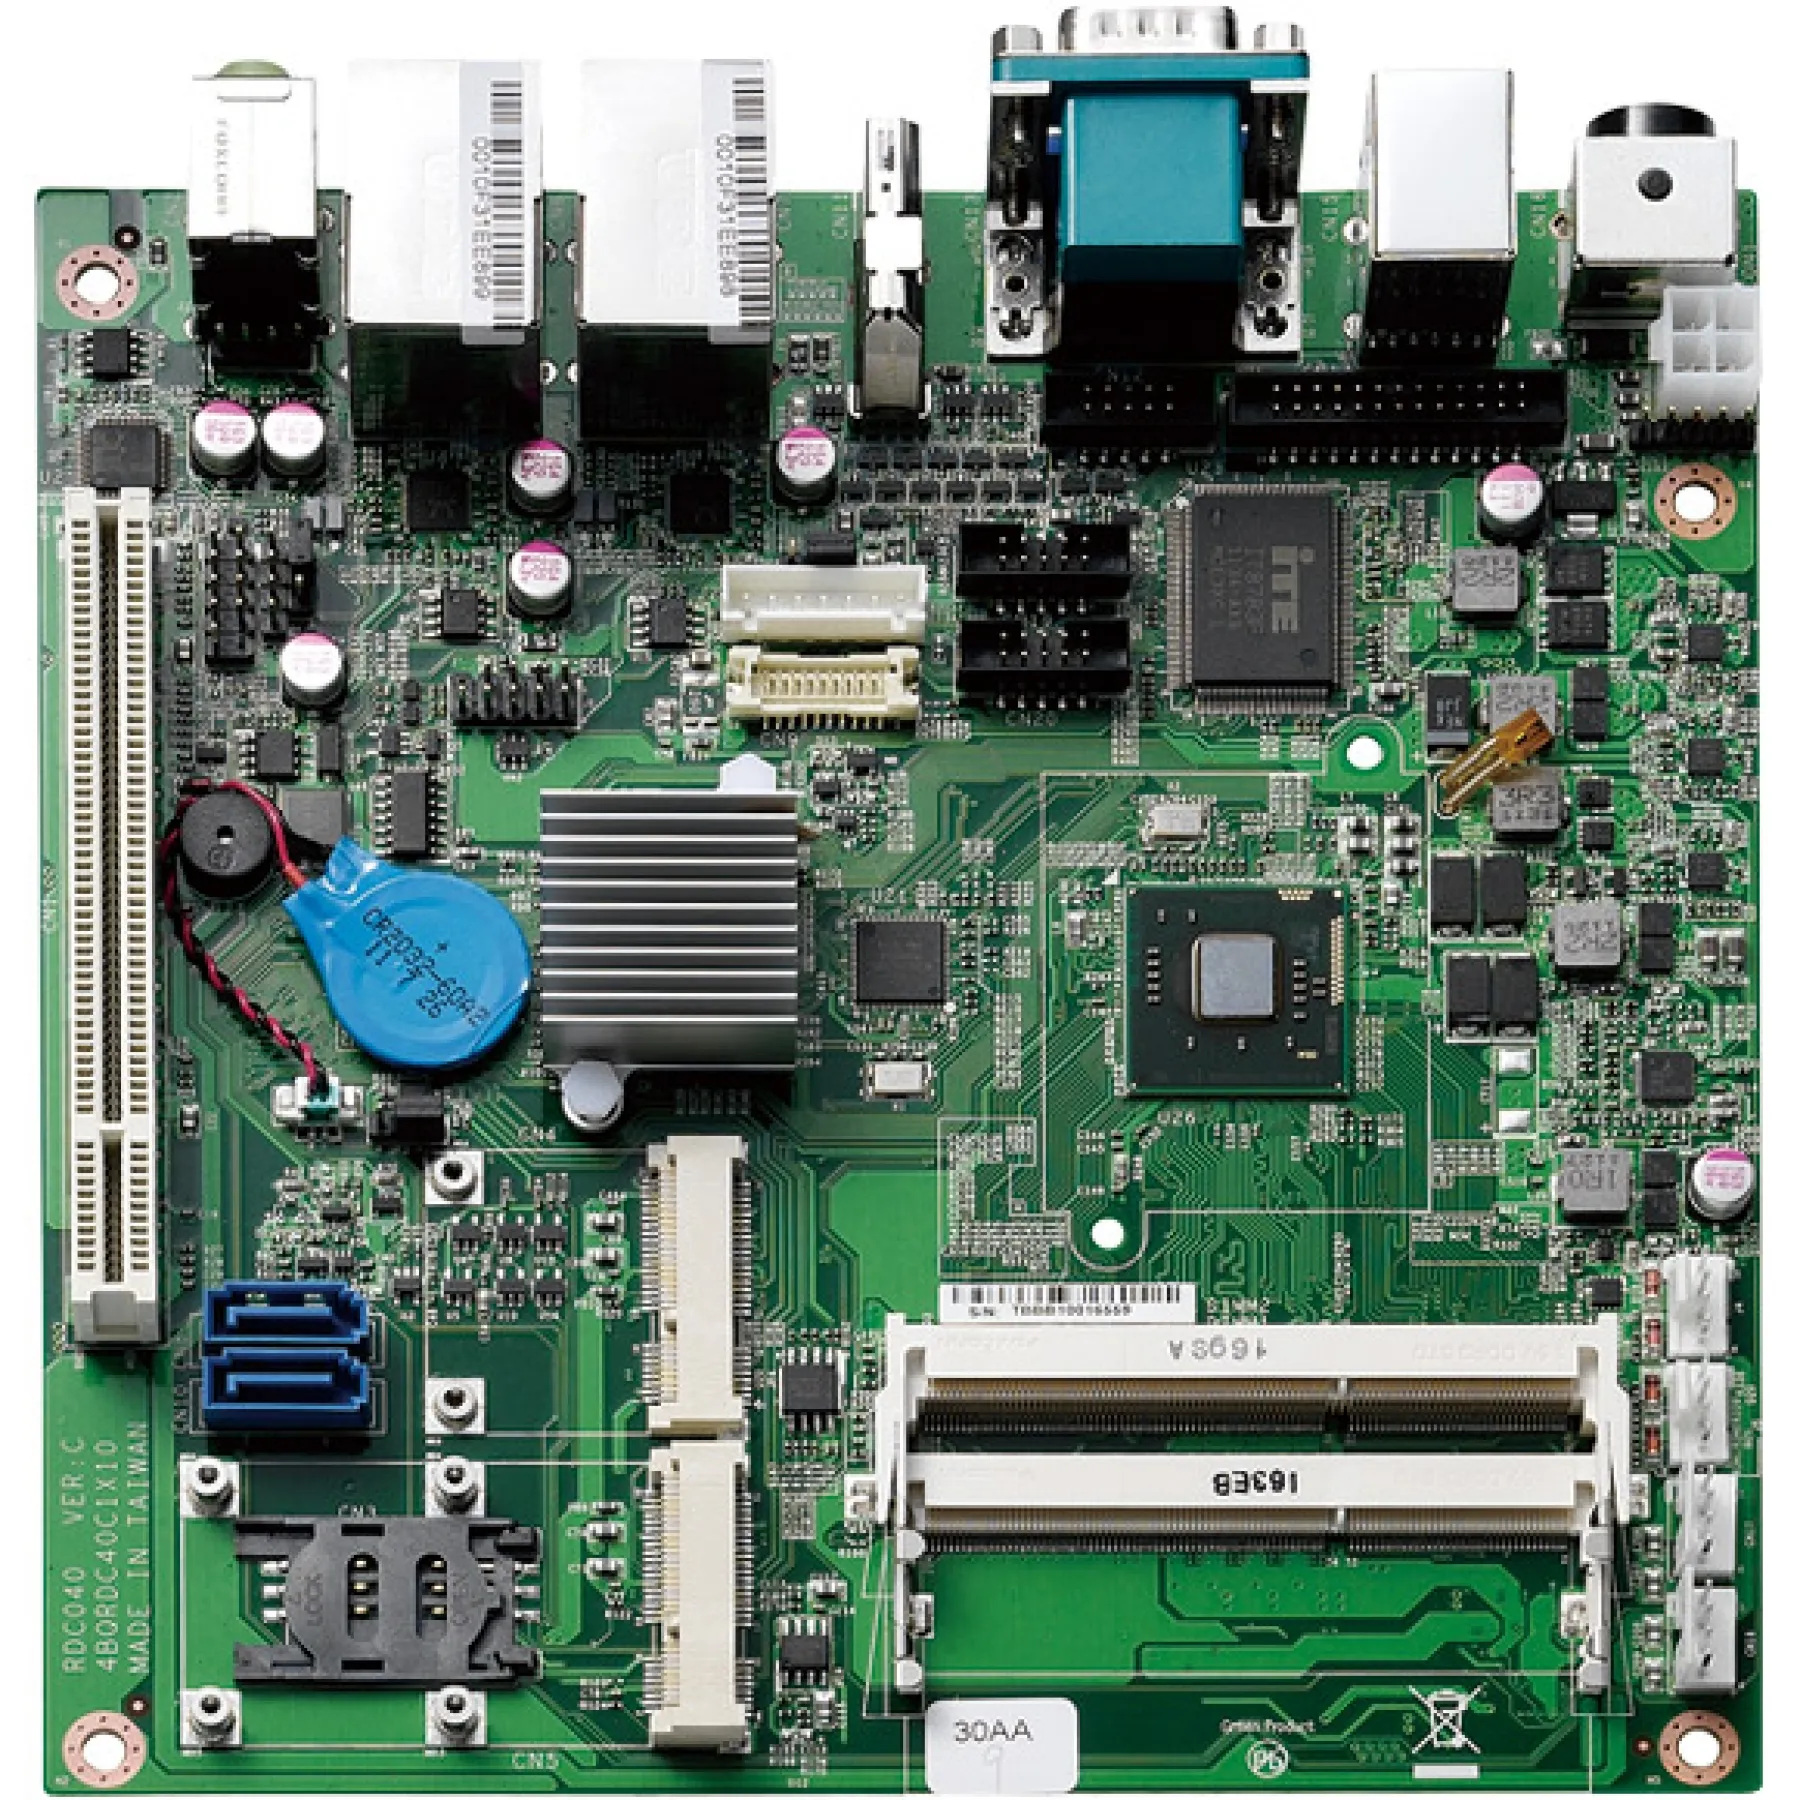 Dollar Industrieel waterstof NEX 604 Mini-ITX, Intel Atom Dual-Core D2550 1.86GHz with 2x Mini PCIe and  PCI - Assured Systems